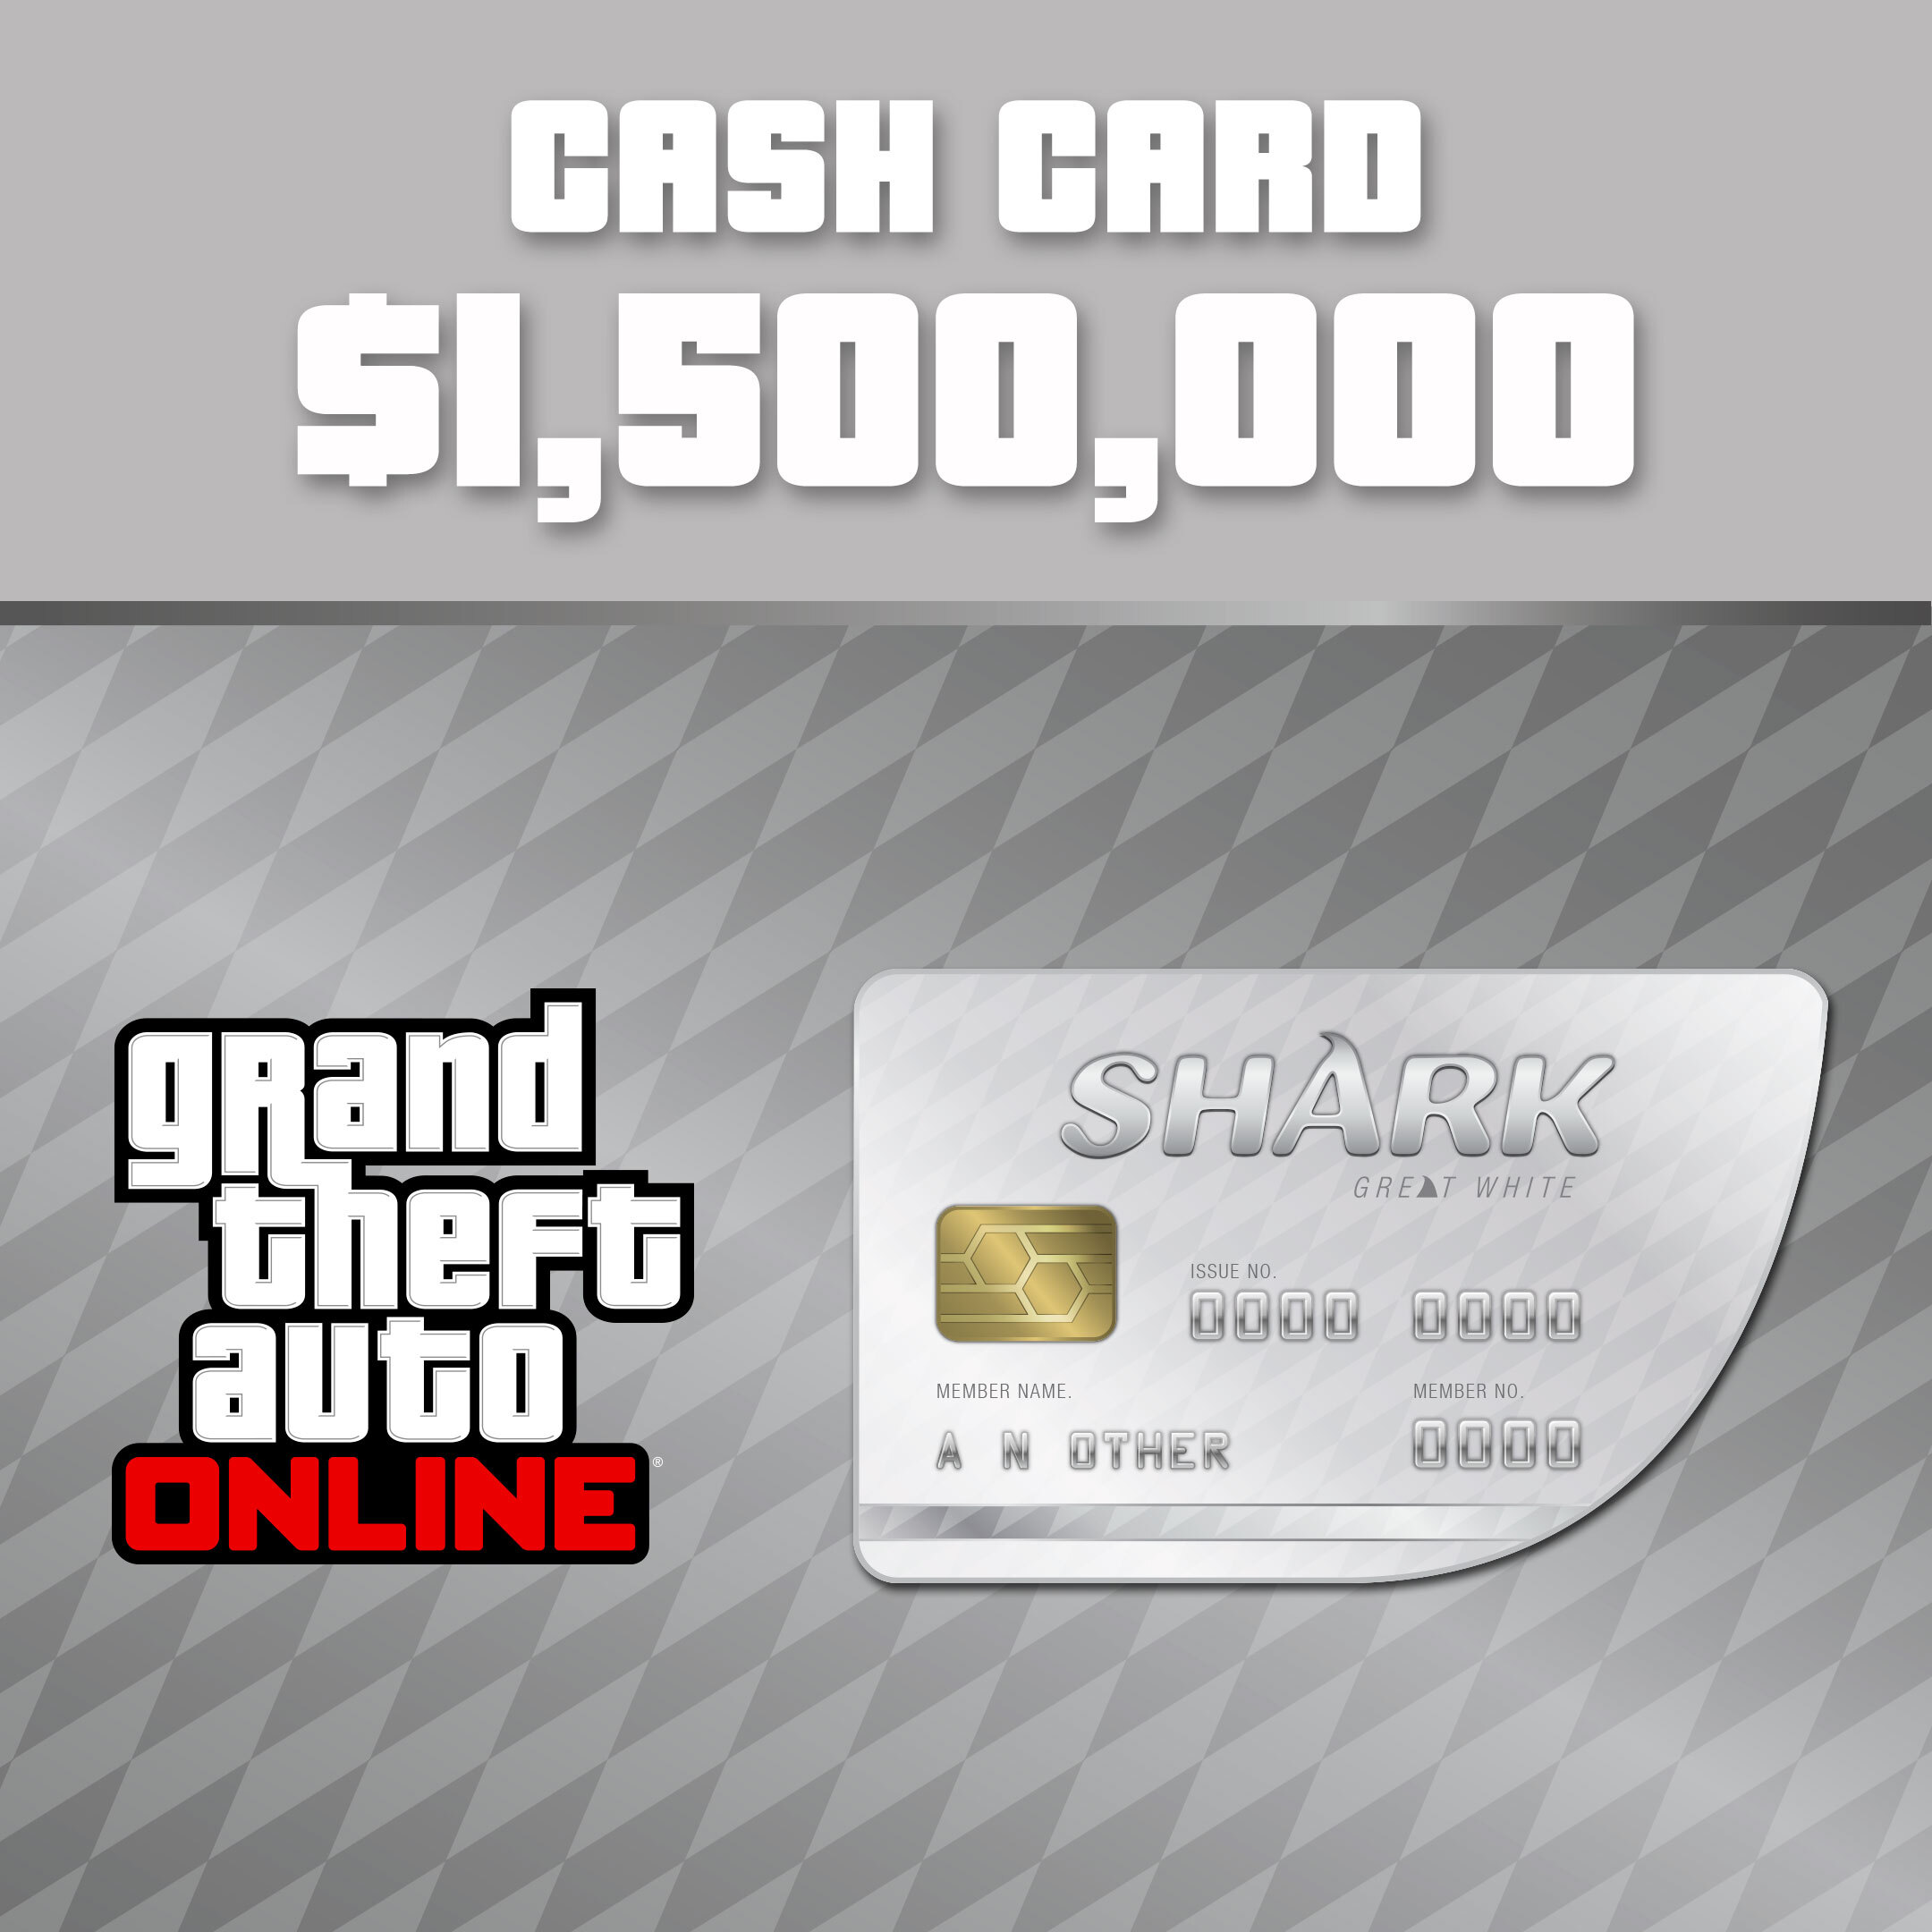  Grand Theft Auto V (PC) : Video Games